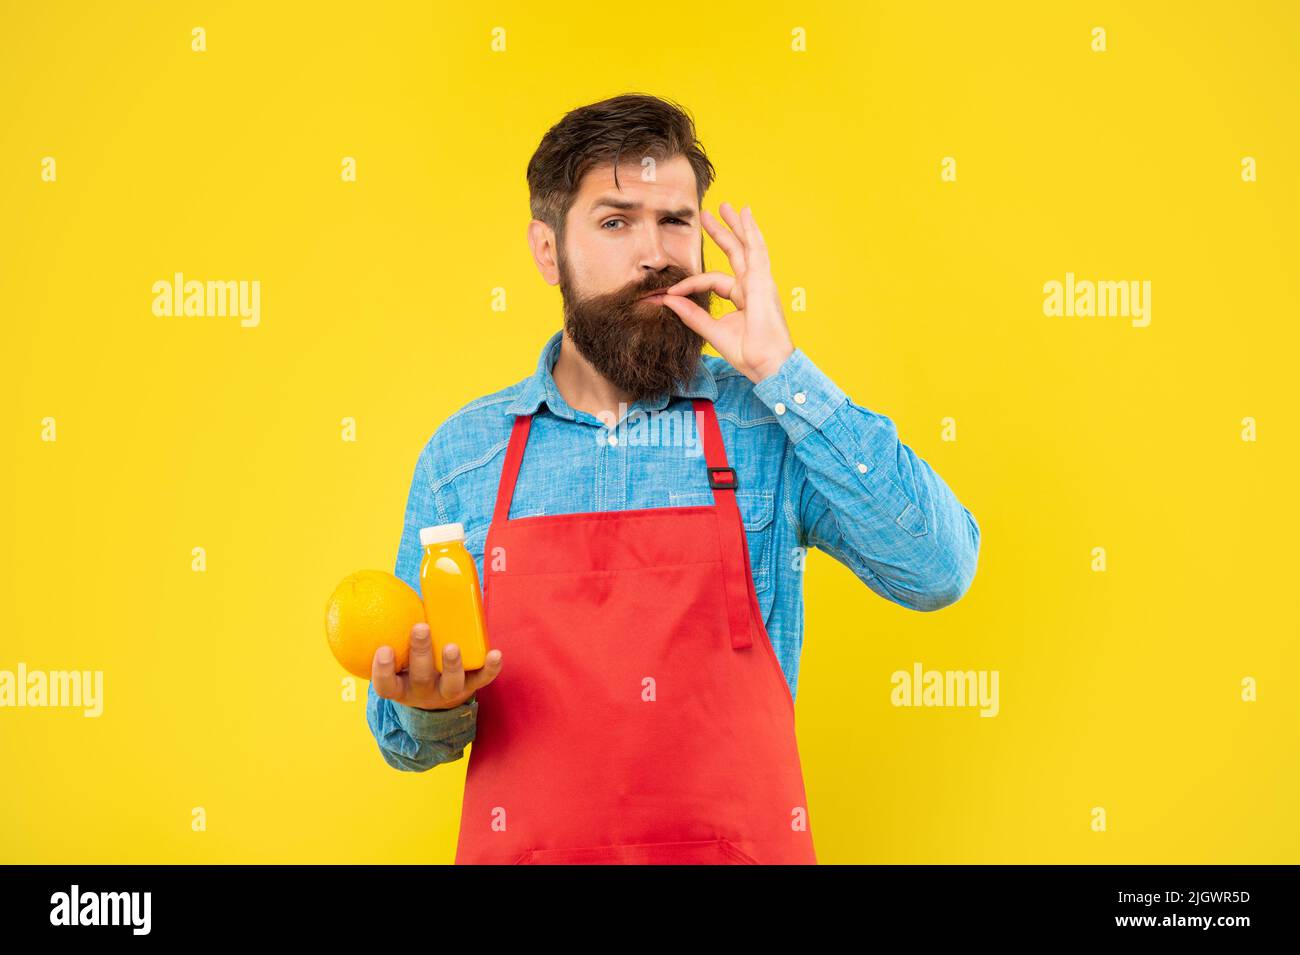 Man in apron licking finger holding orange and juice bottle yellow background, juice barkeeper Stock Photo